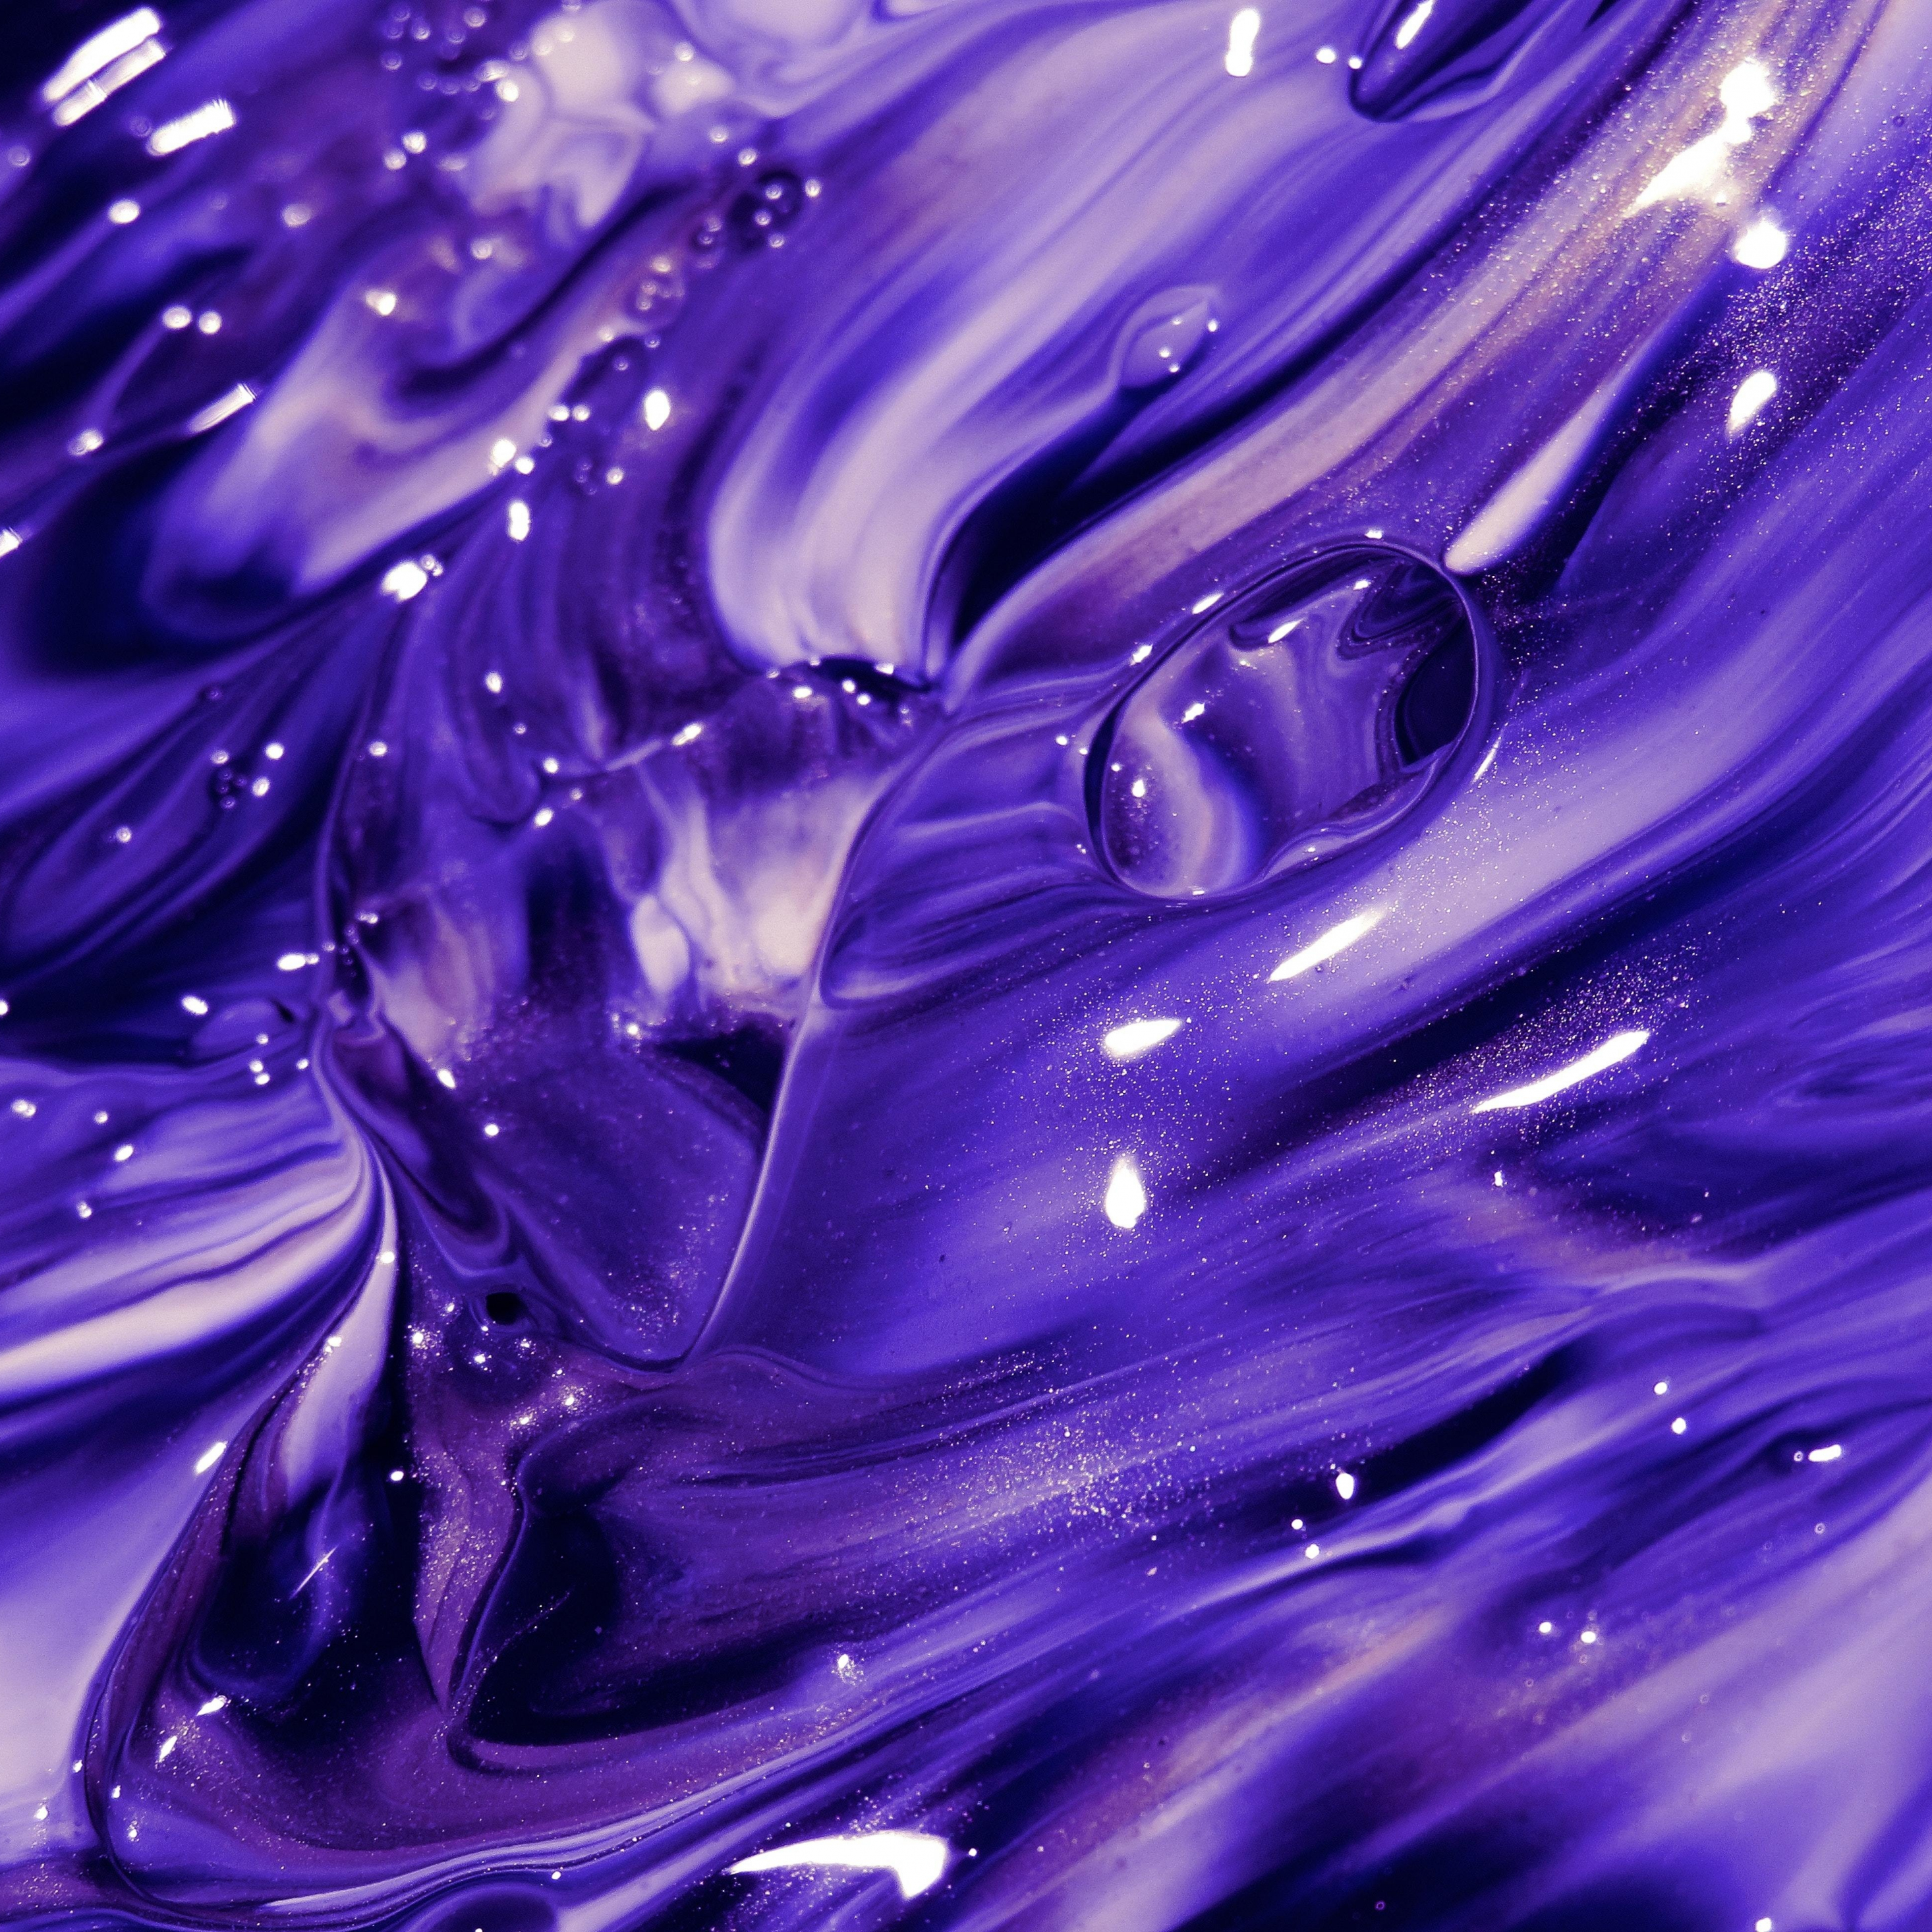 Download wallpaper 2932x2932 violet-purple art, texture, ipad pro retina,  2932x2932 hd background, 23194